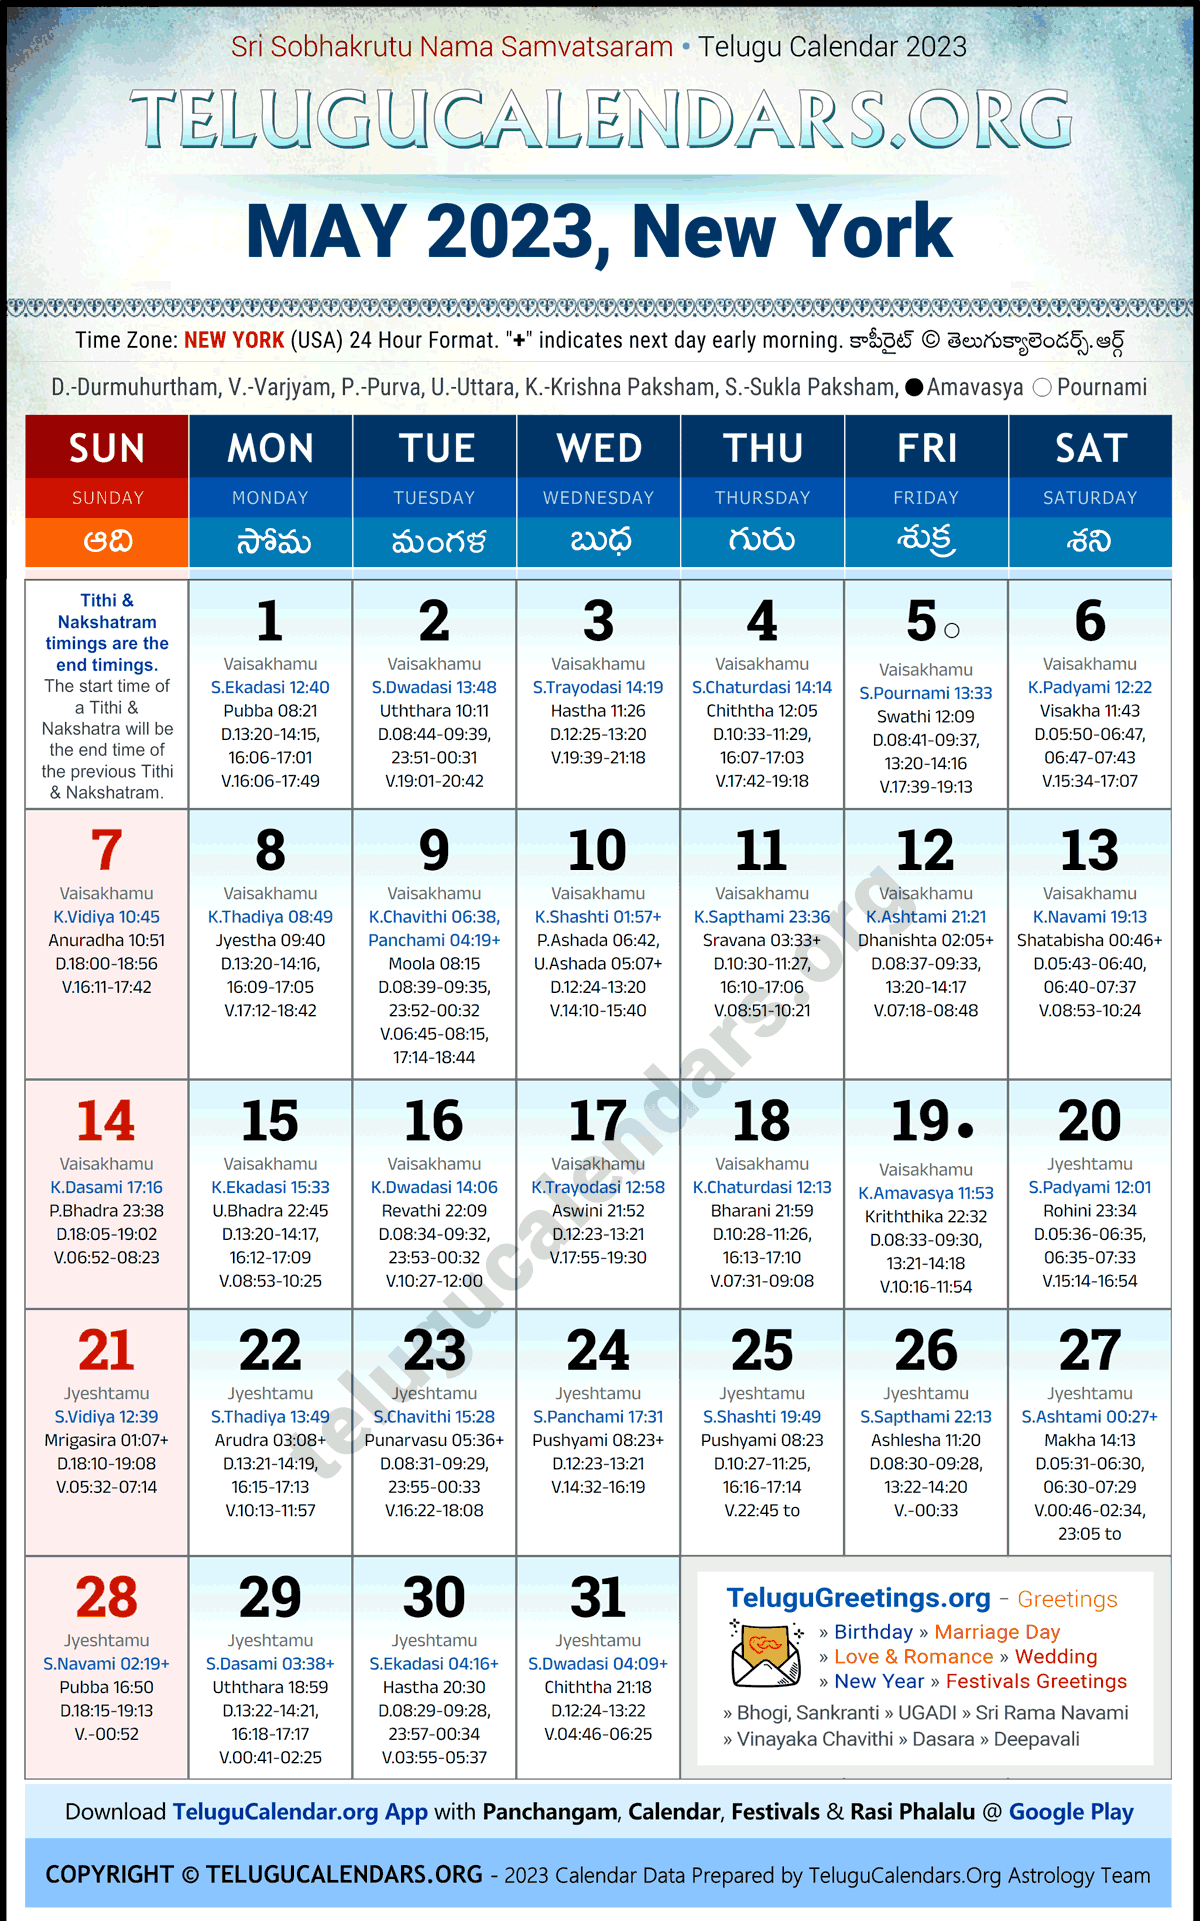 Telugu Calendar 2023 May Festivals for New York